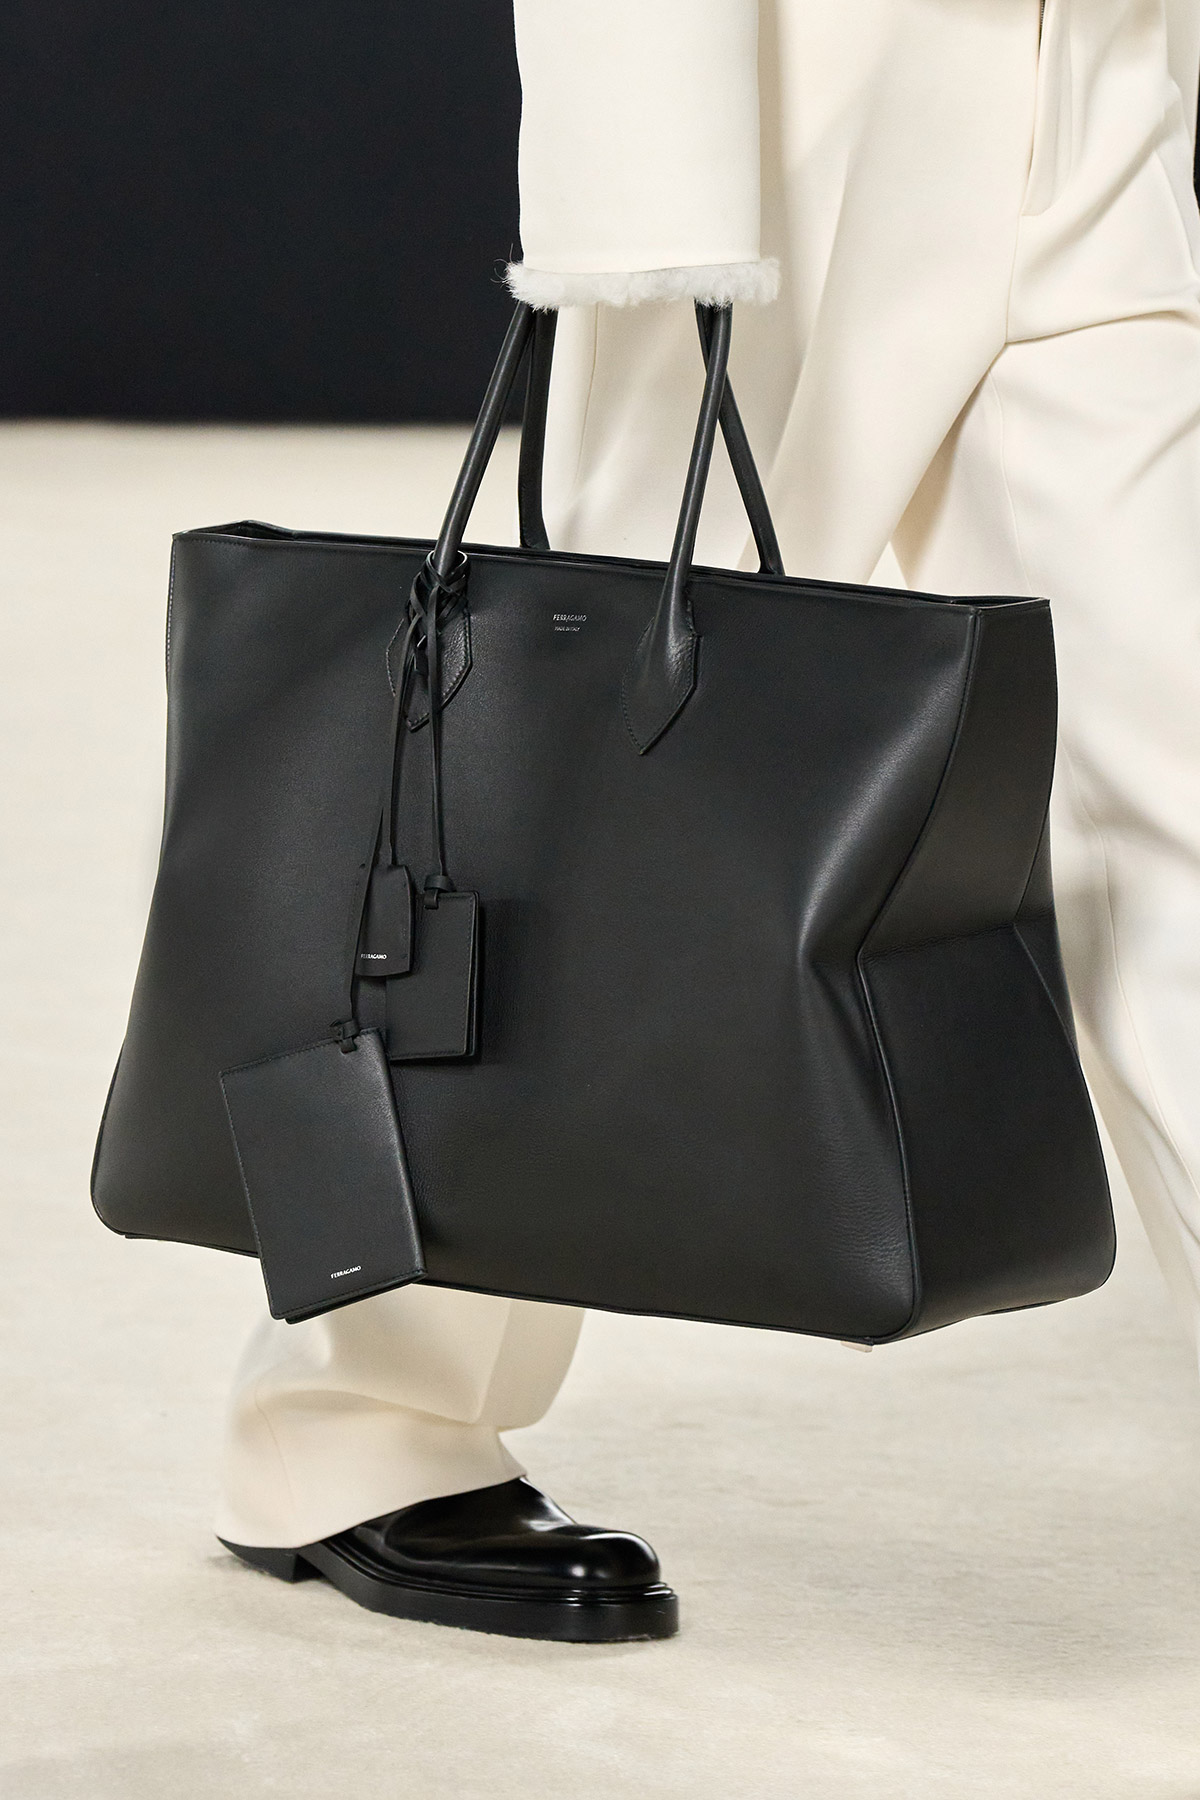 A Closer Look at the New Ferragamo Tote Bag | The Fashionography